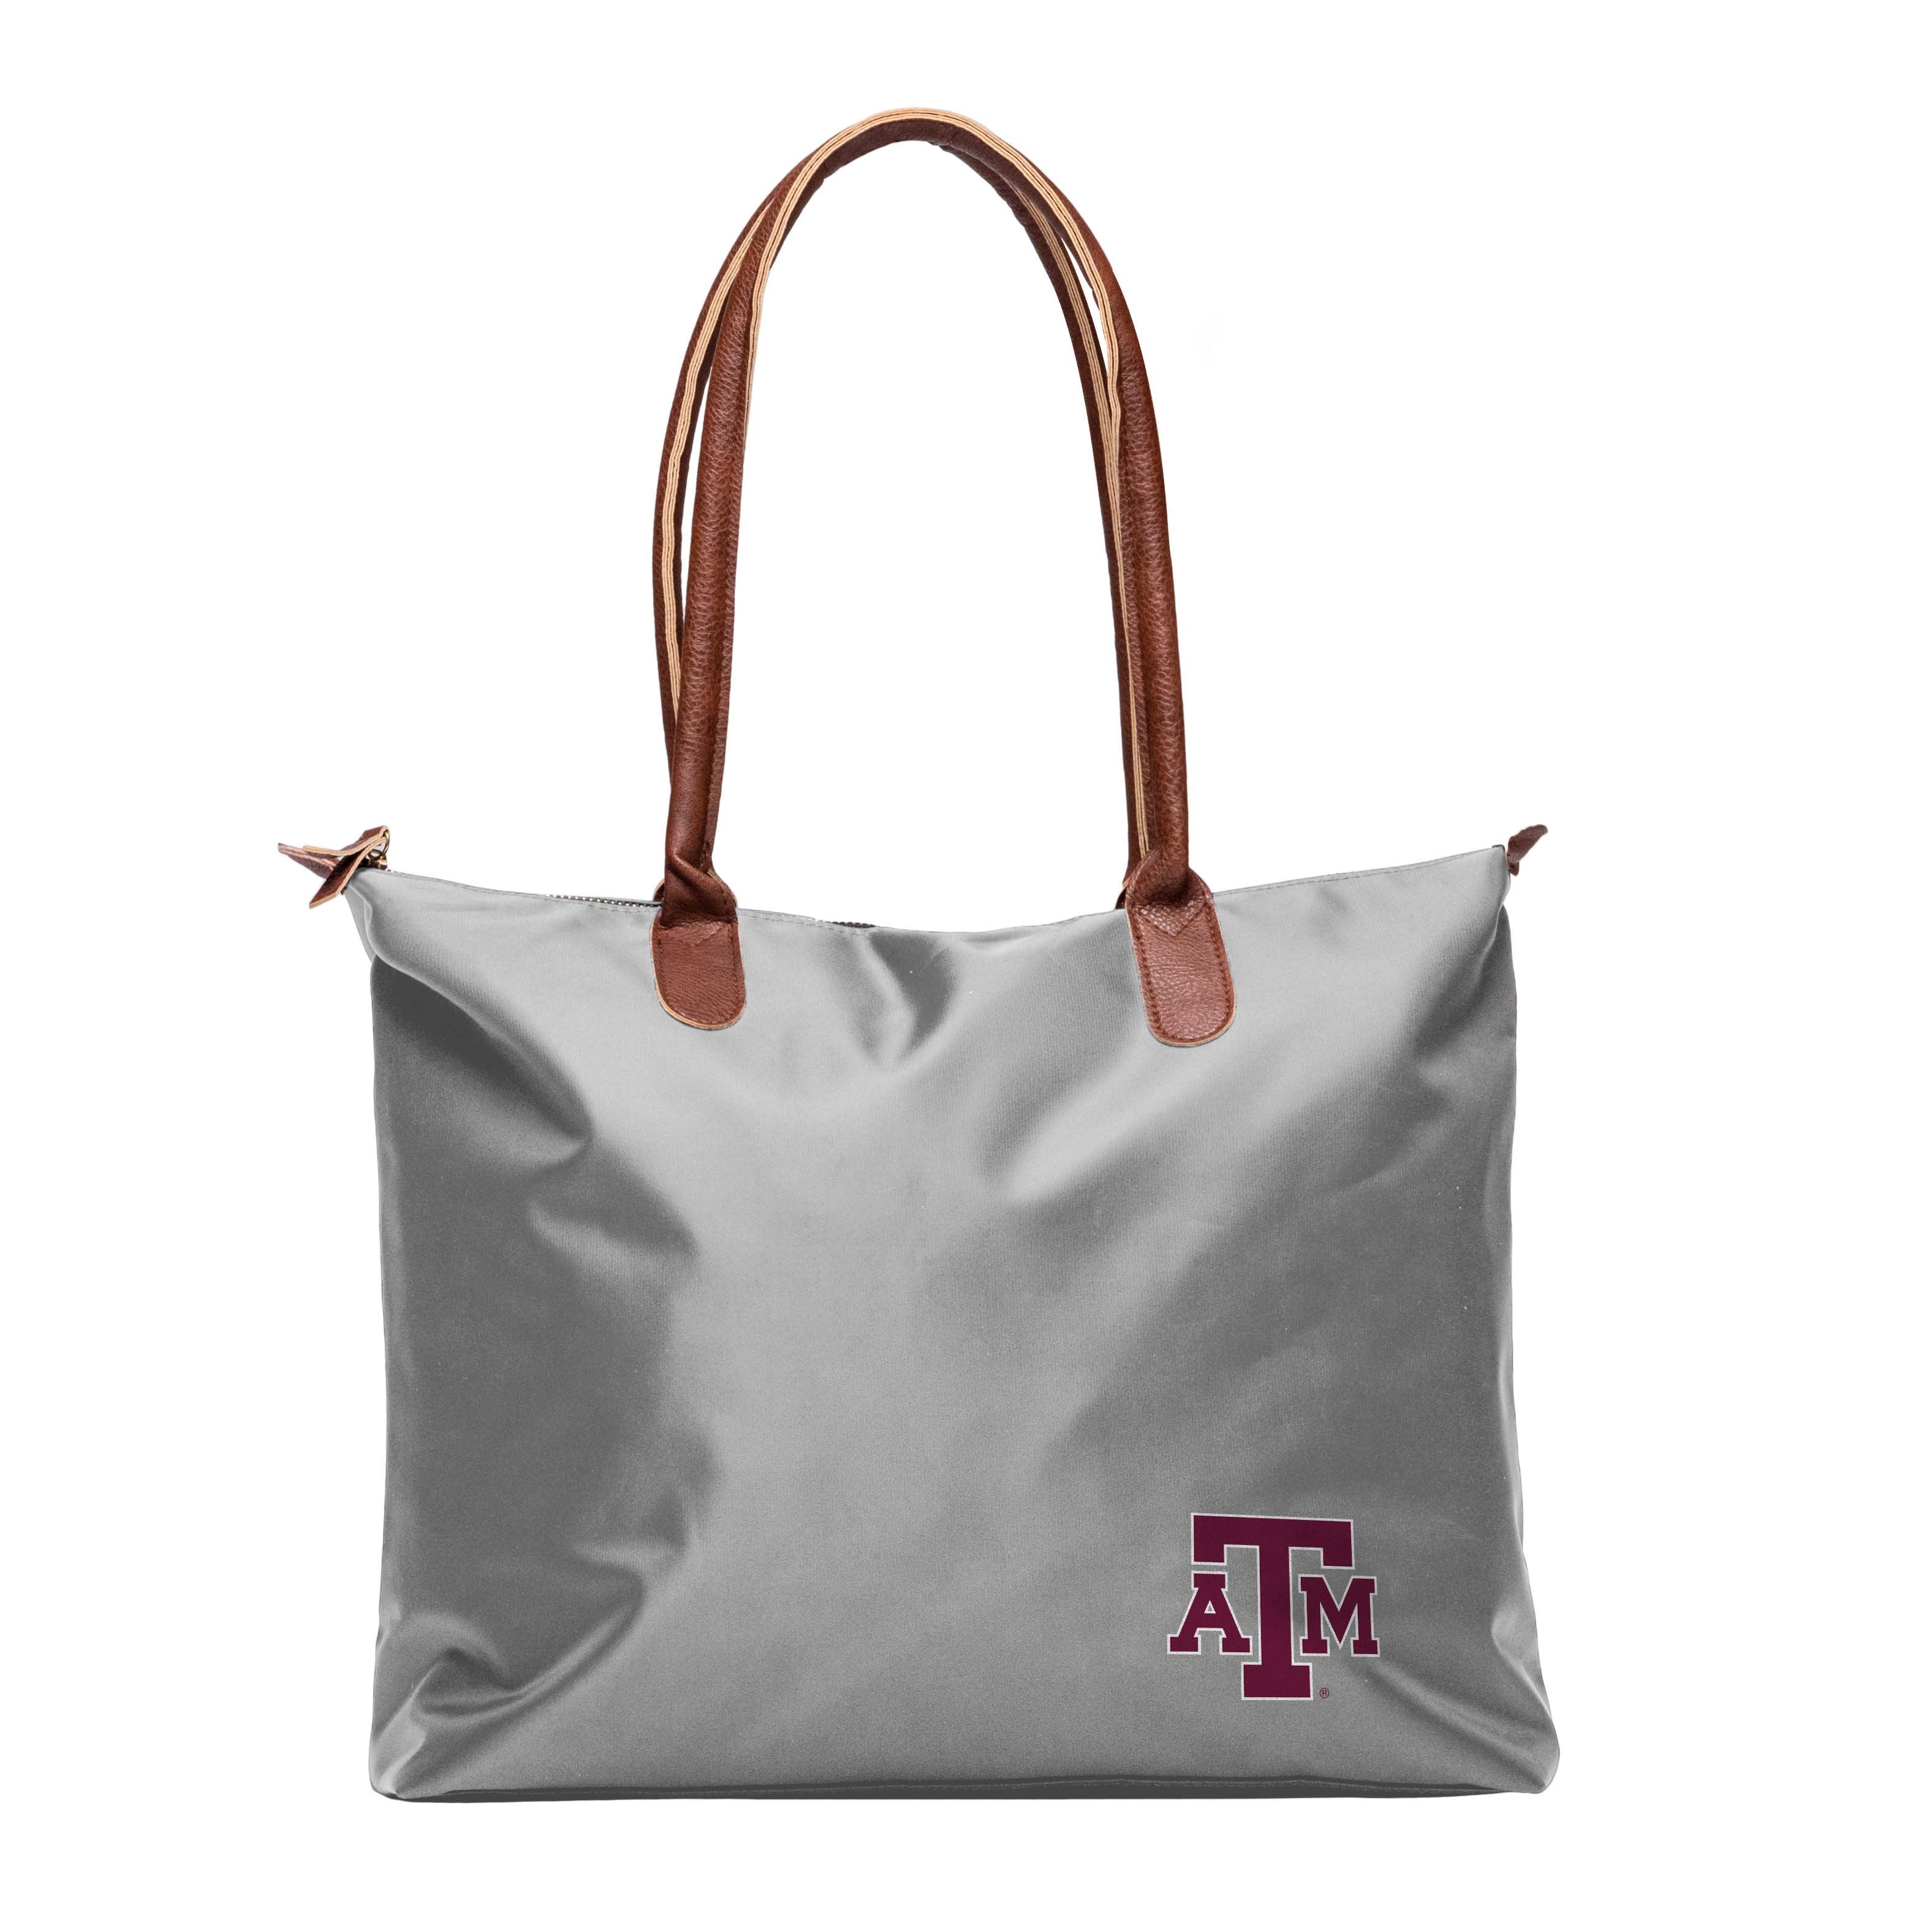 Texas A&M University Purse, Texas A&M Aggies Tote Bags, Handbags